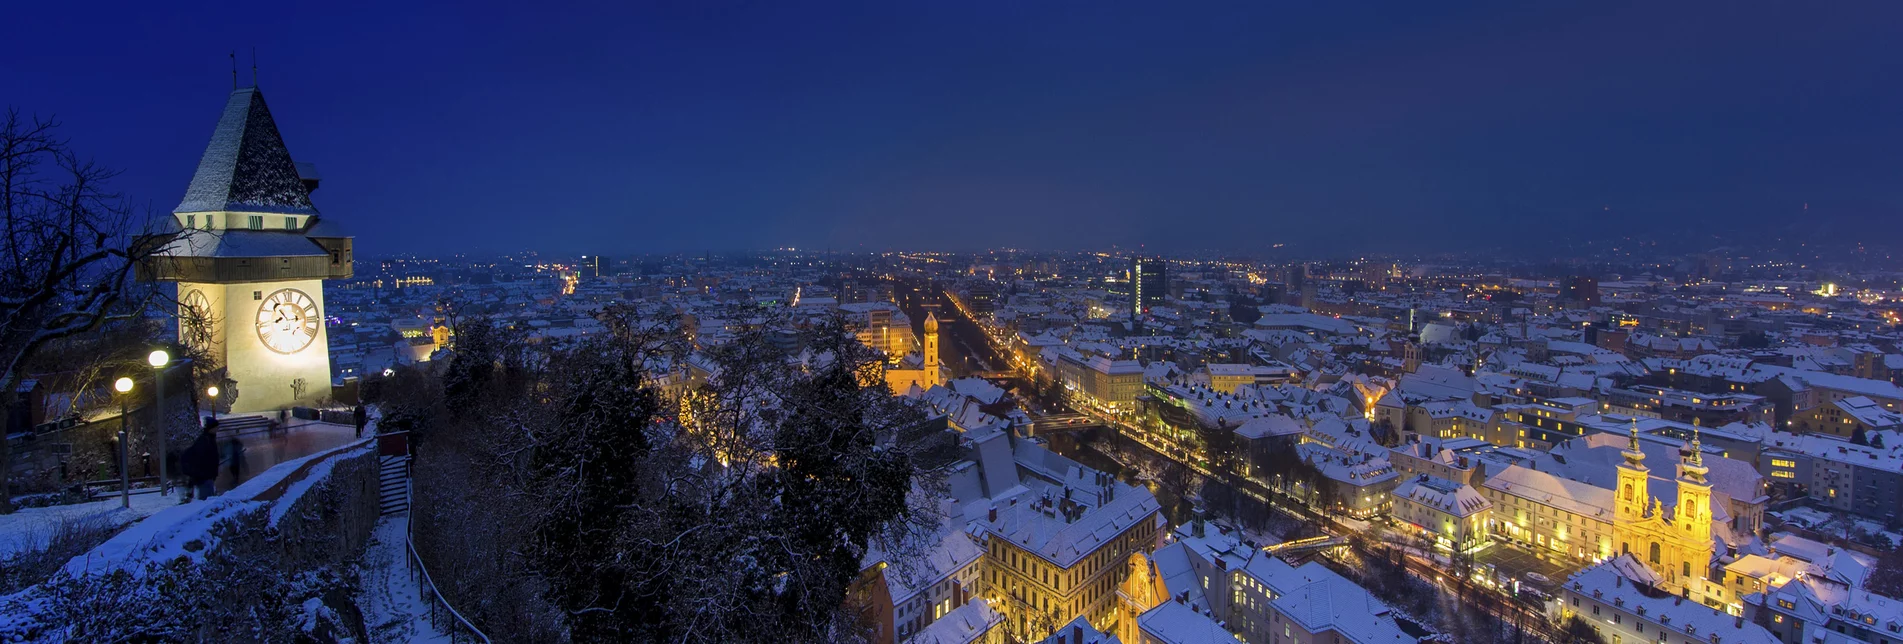 Schloßberg view over the wintry city of Graz | © Steiermark Tourismus | Harry Schiffer